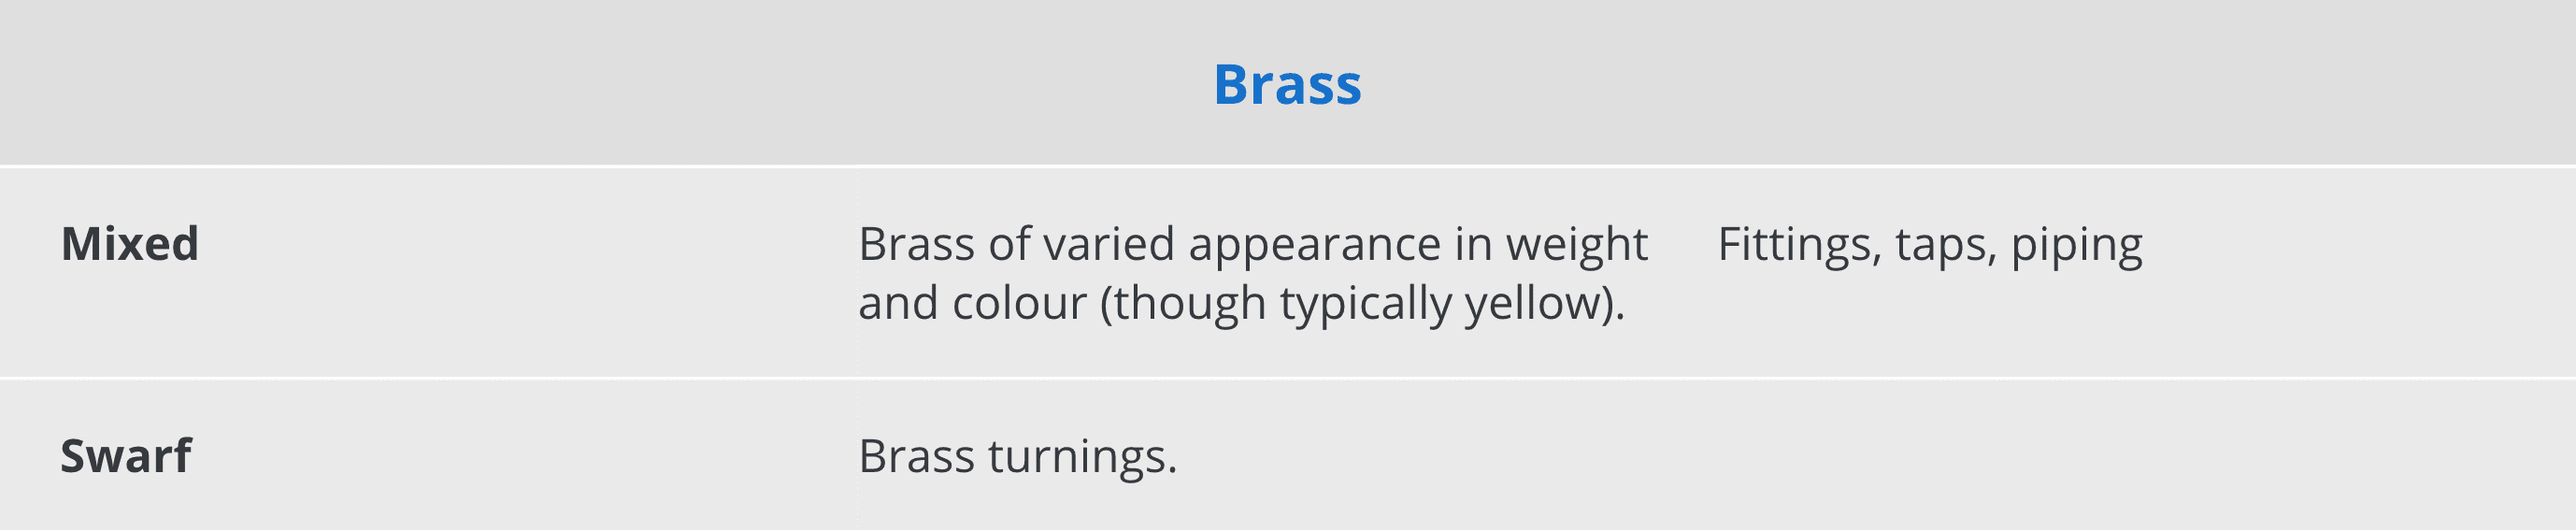 brass-information